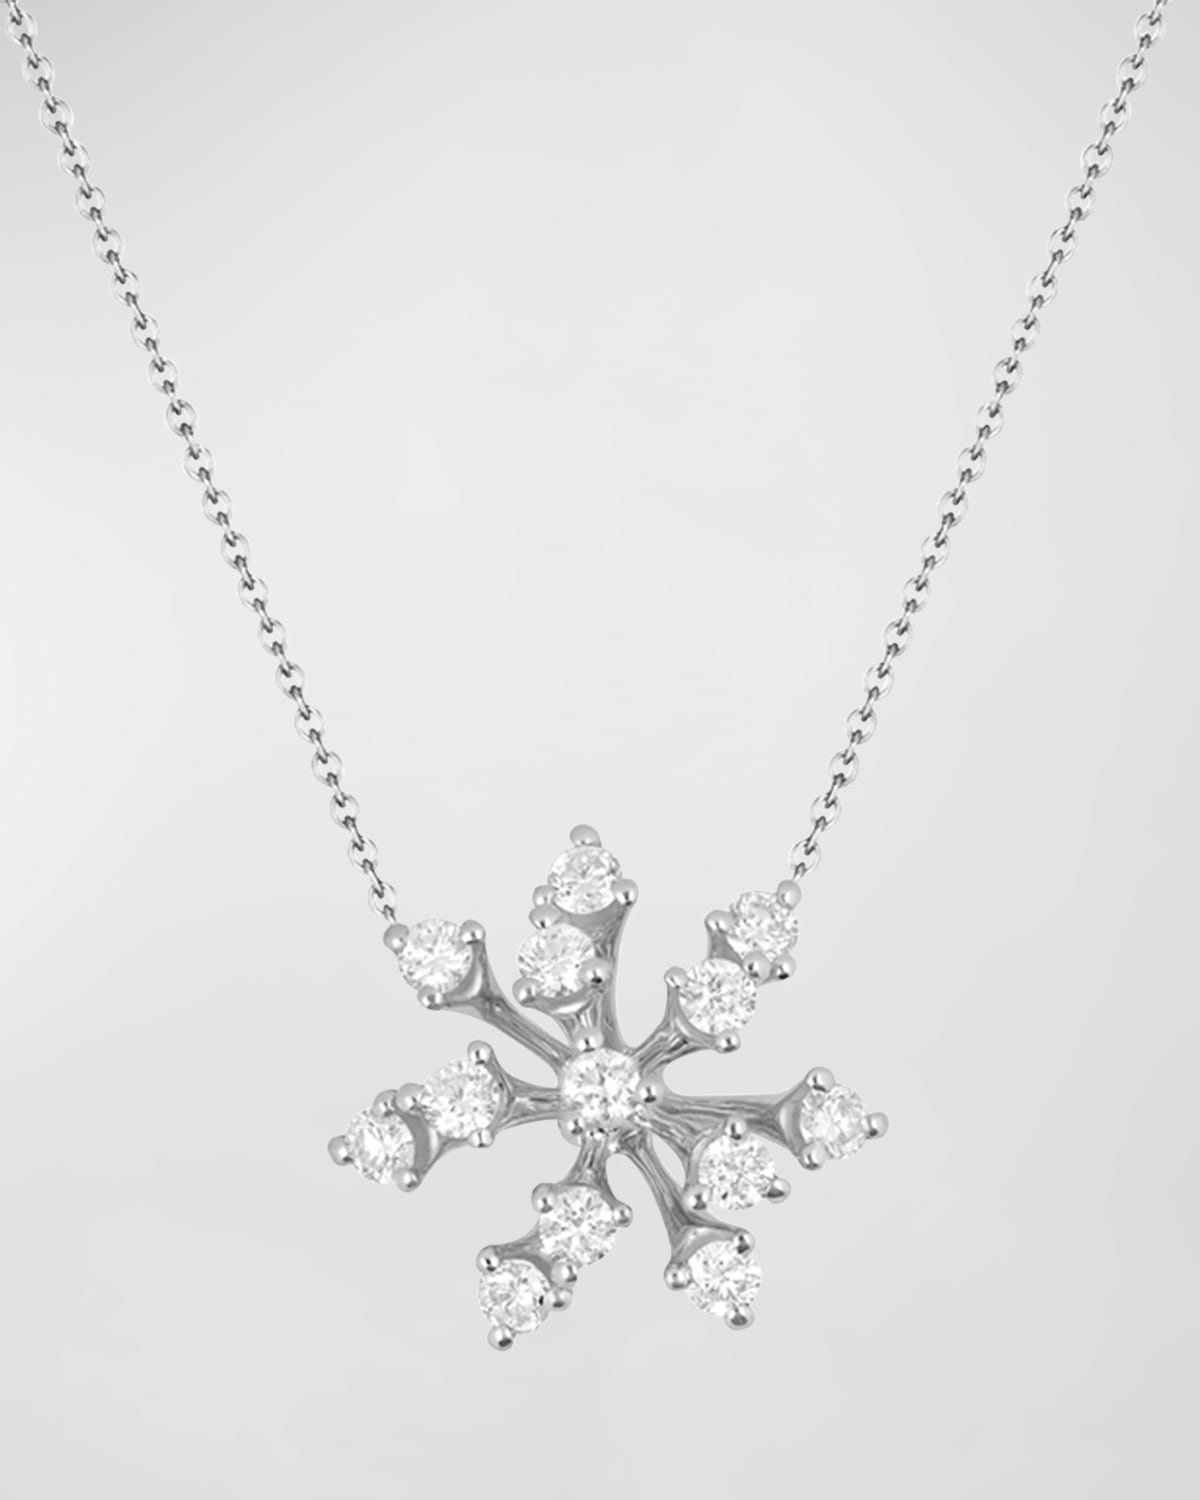 18K Luminus Gold Pendant Necklace with Diamonds, 18"L